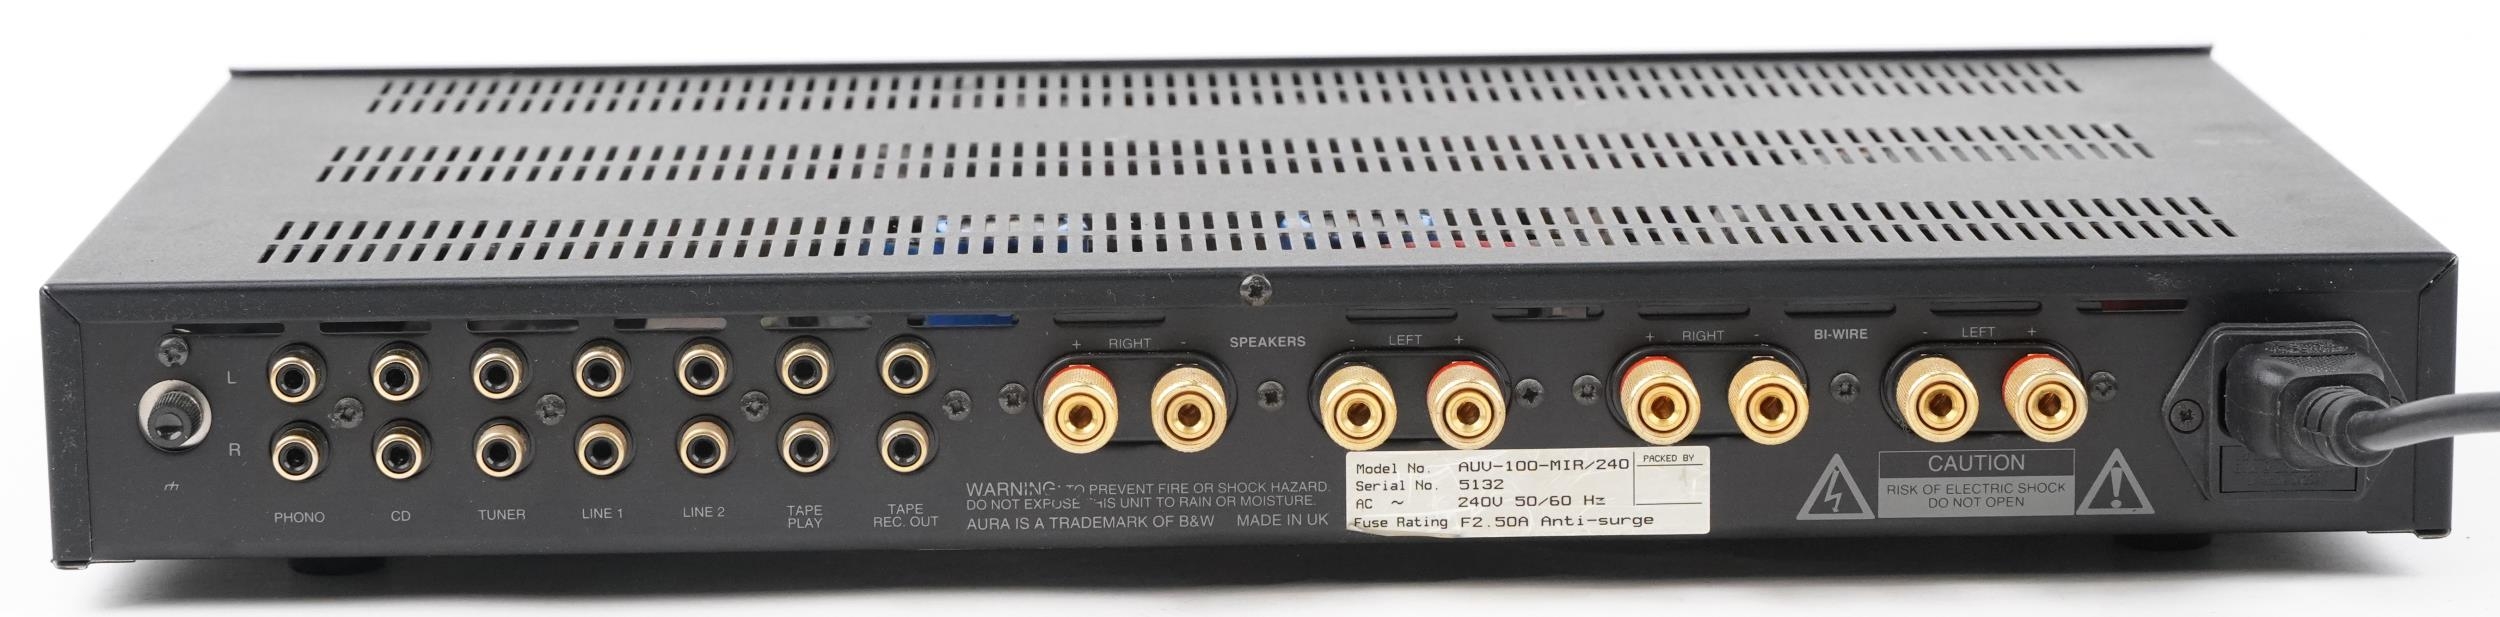 Aura Evolution HiFi amplifier model AUV-100-MIR/240 - Image 2 of 3